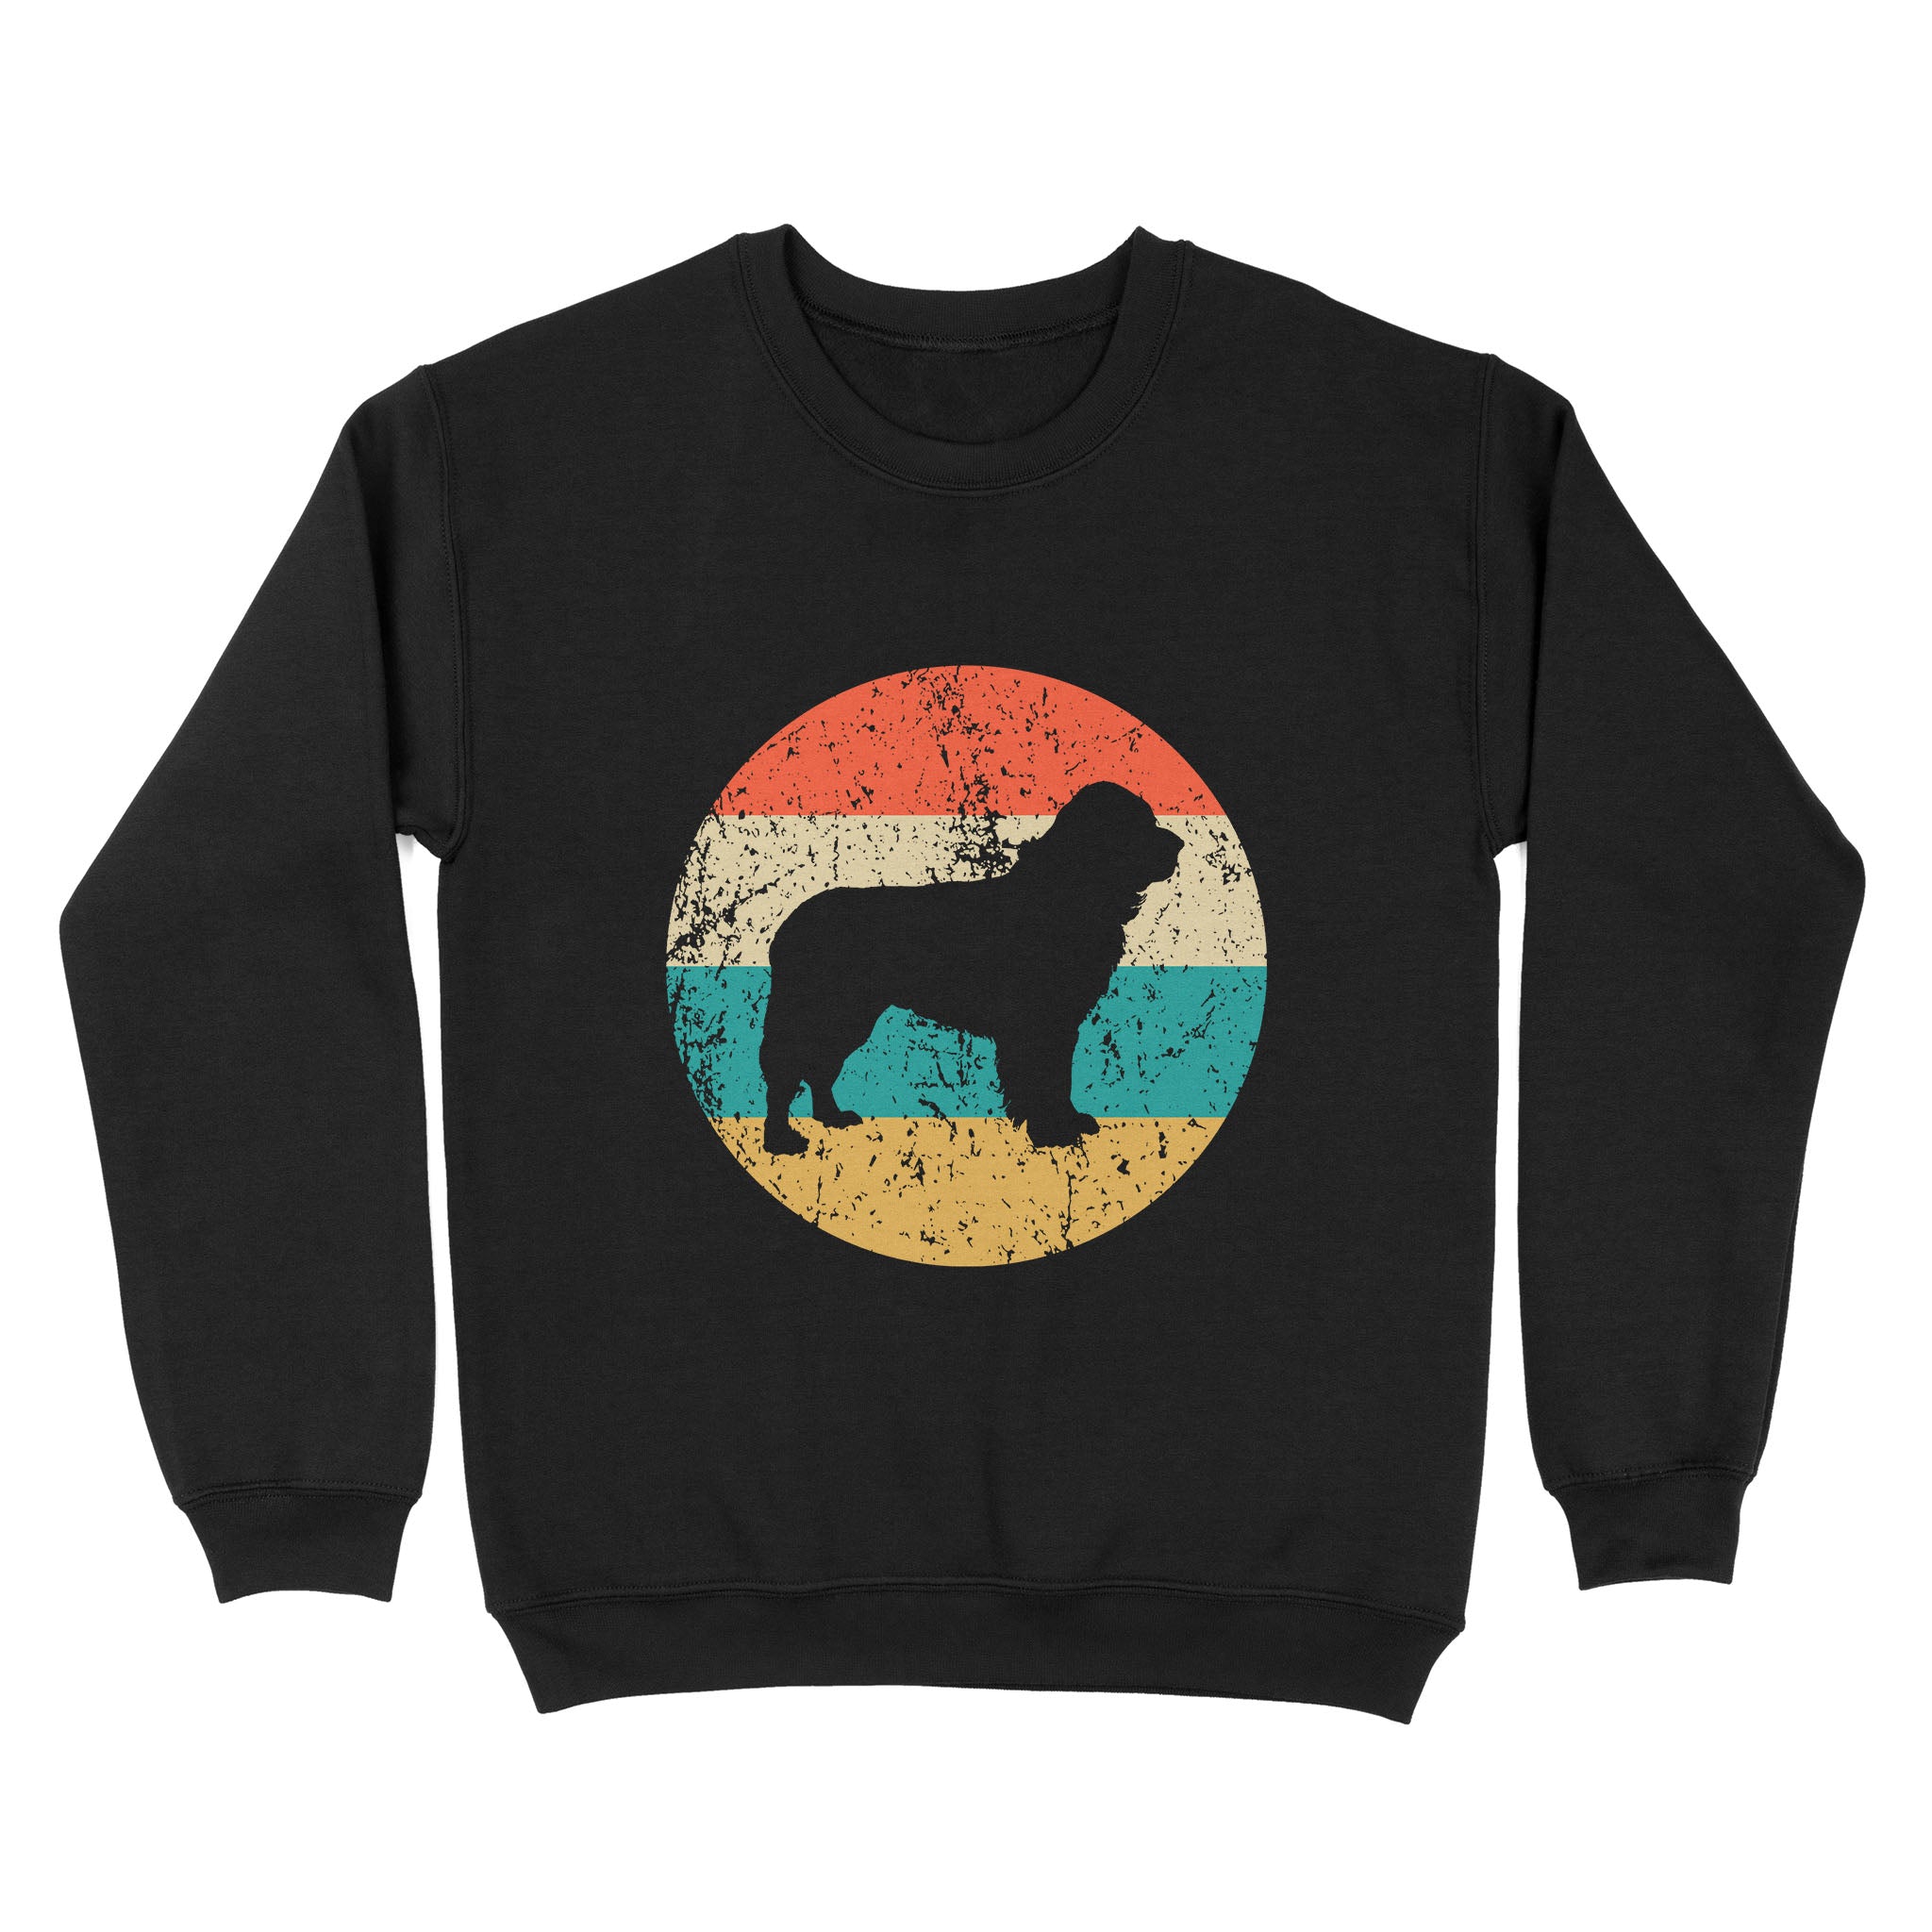 Retro Gift For Dog Lover - NewFoundland Vintage - Standard Crew Neck Sweatshirt